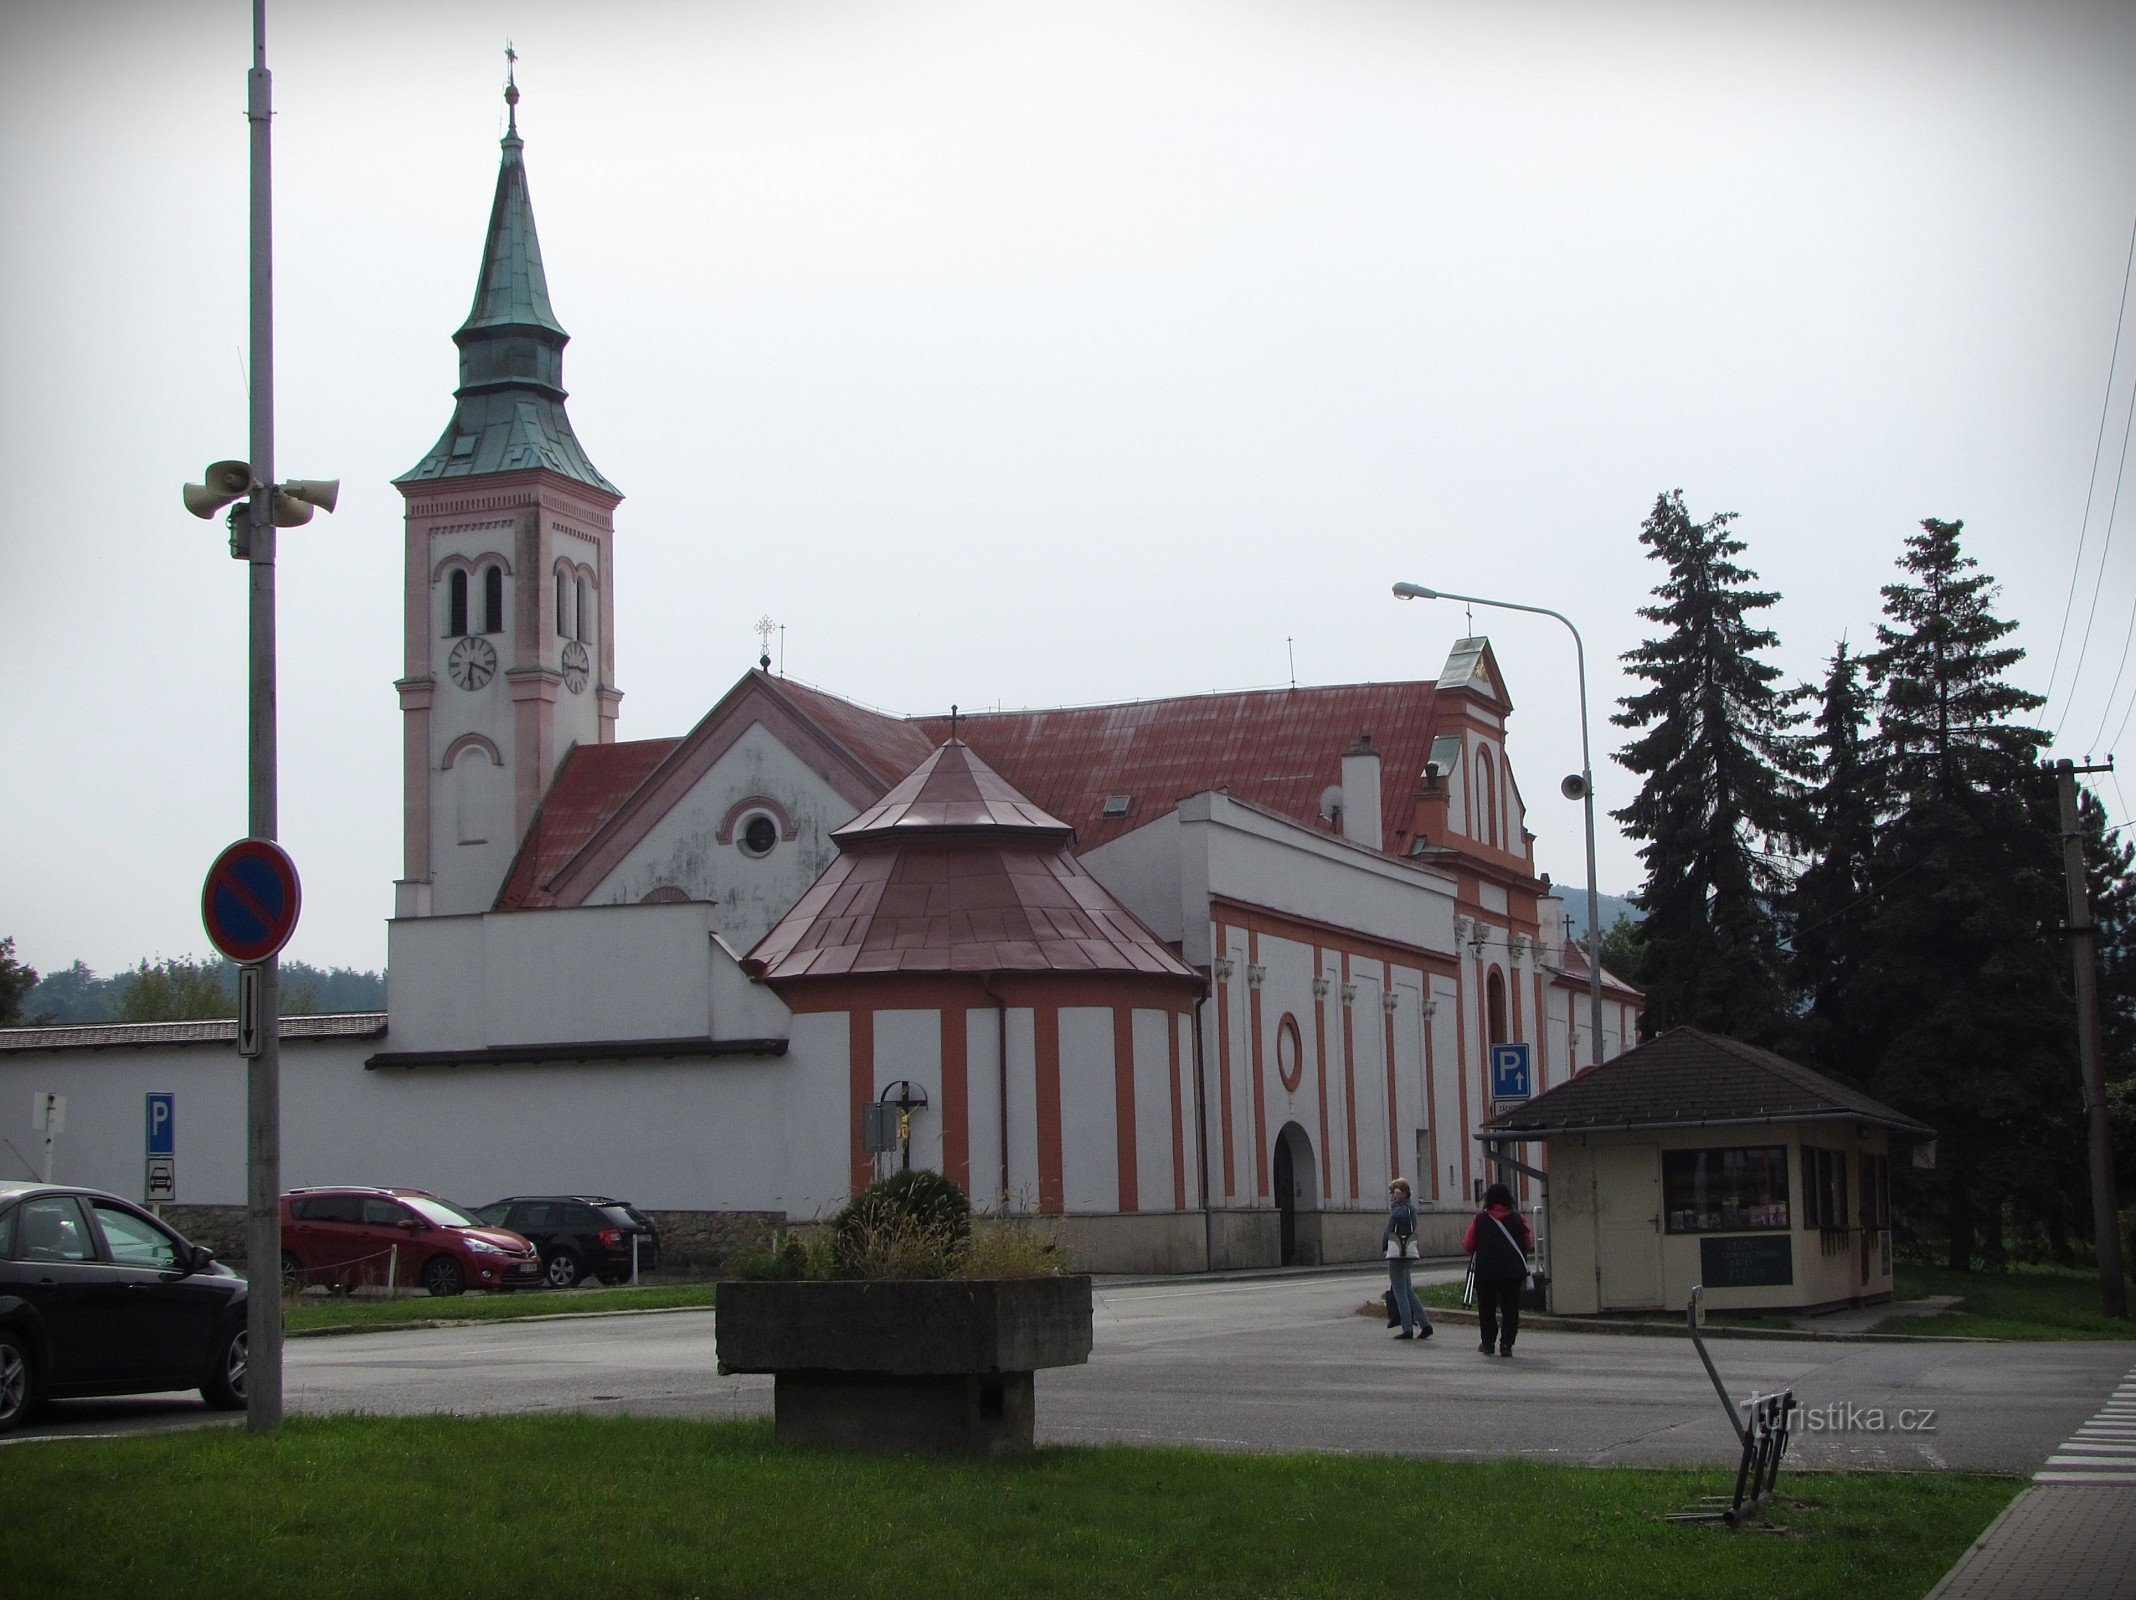 Novojičín Spaanse Kapel